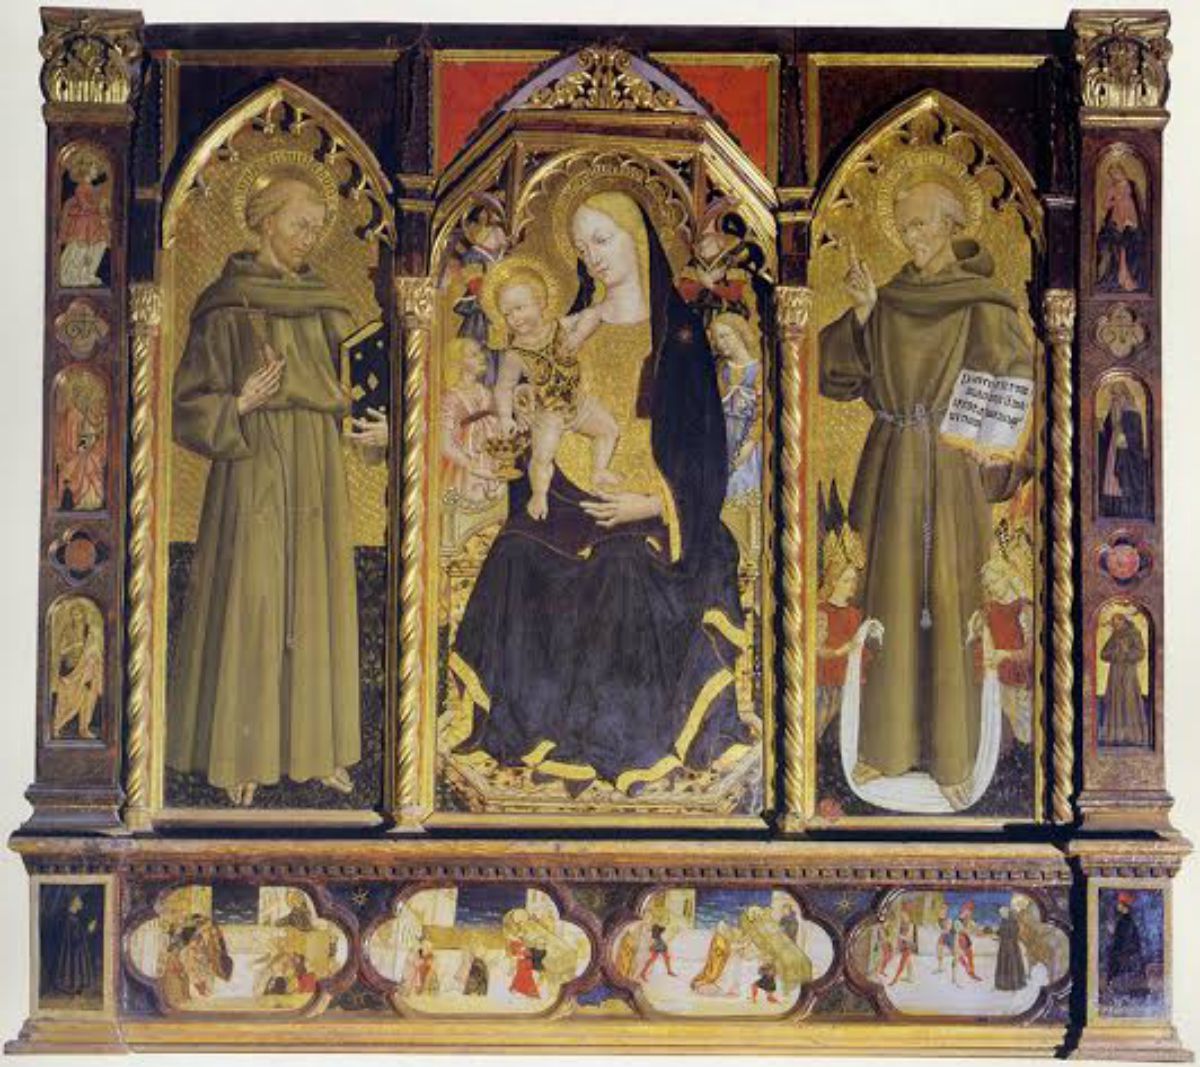 1460-70 Francesco di Gentile da Fabriano, Madonna con Bambino in trono e angeli, San Francesco d'Assisi, San Bernardino da Siena Chiesa di S. Francesco Matelica .jpg